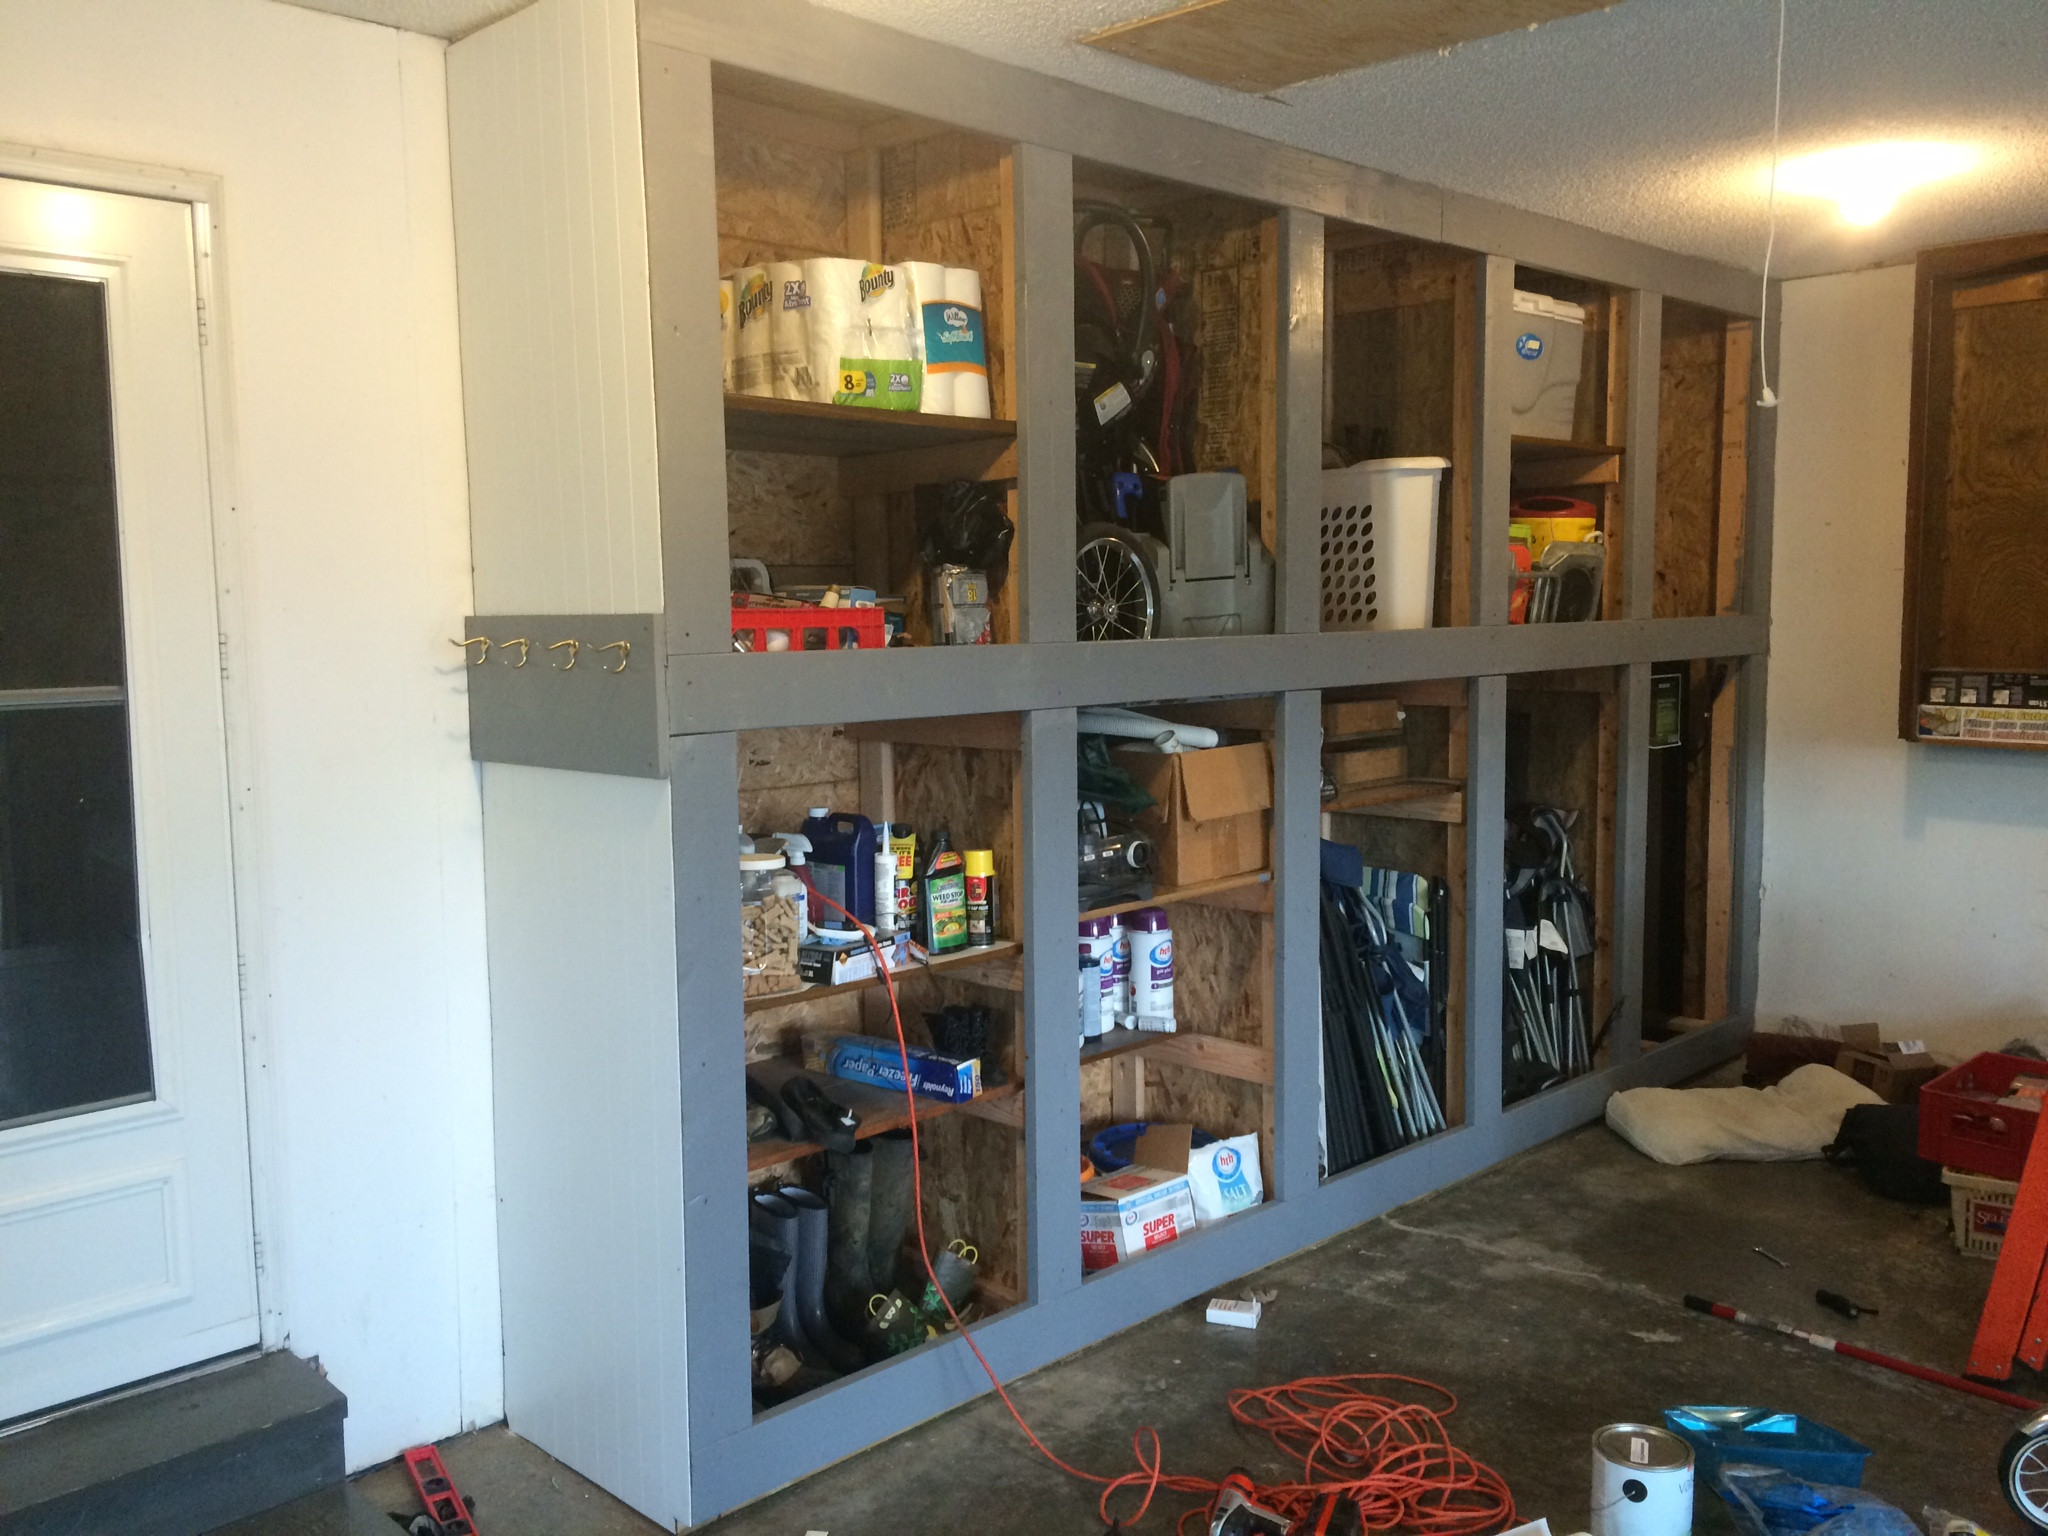 Best ideas about Diy Garage Storage
. Save or Pin How to Plan & Build DIY Garage Storage Cabinets Now.